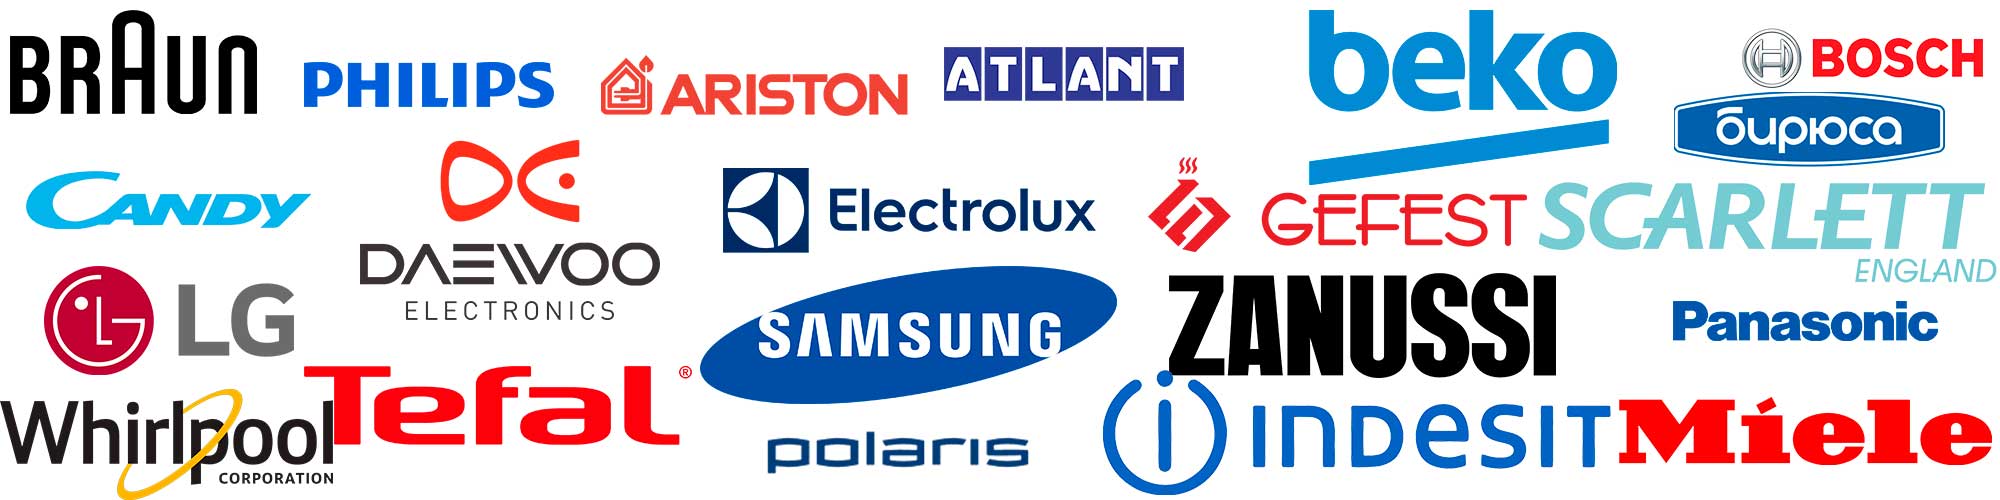 brands-of-equipment-mq